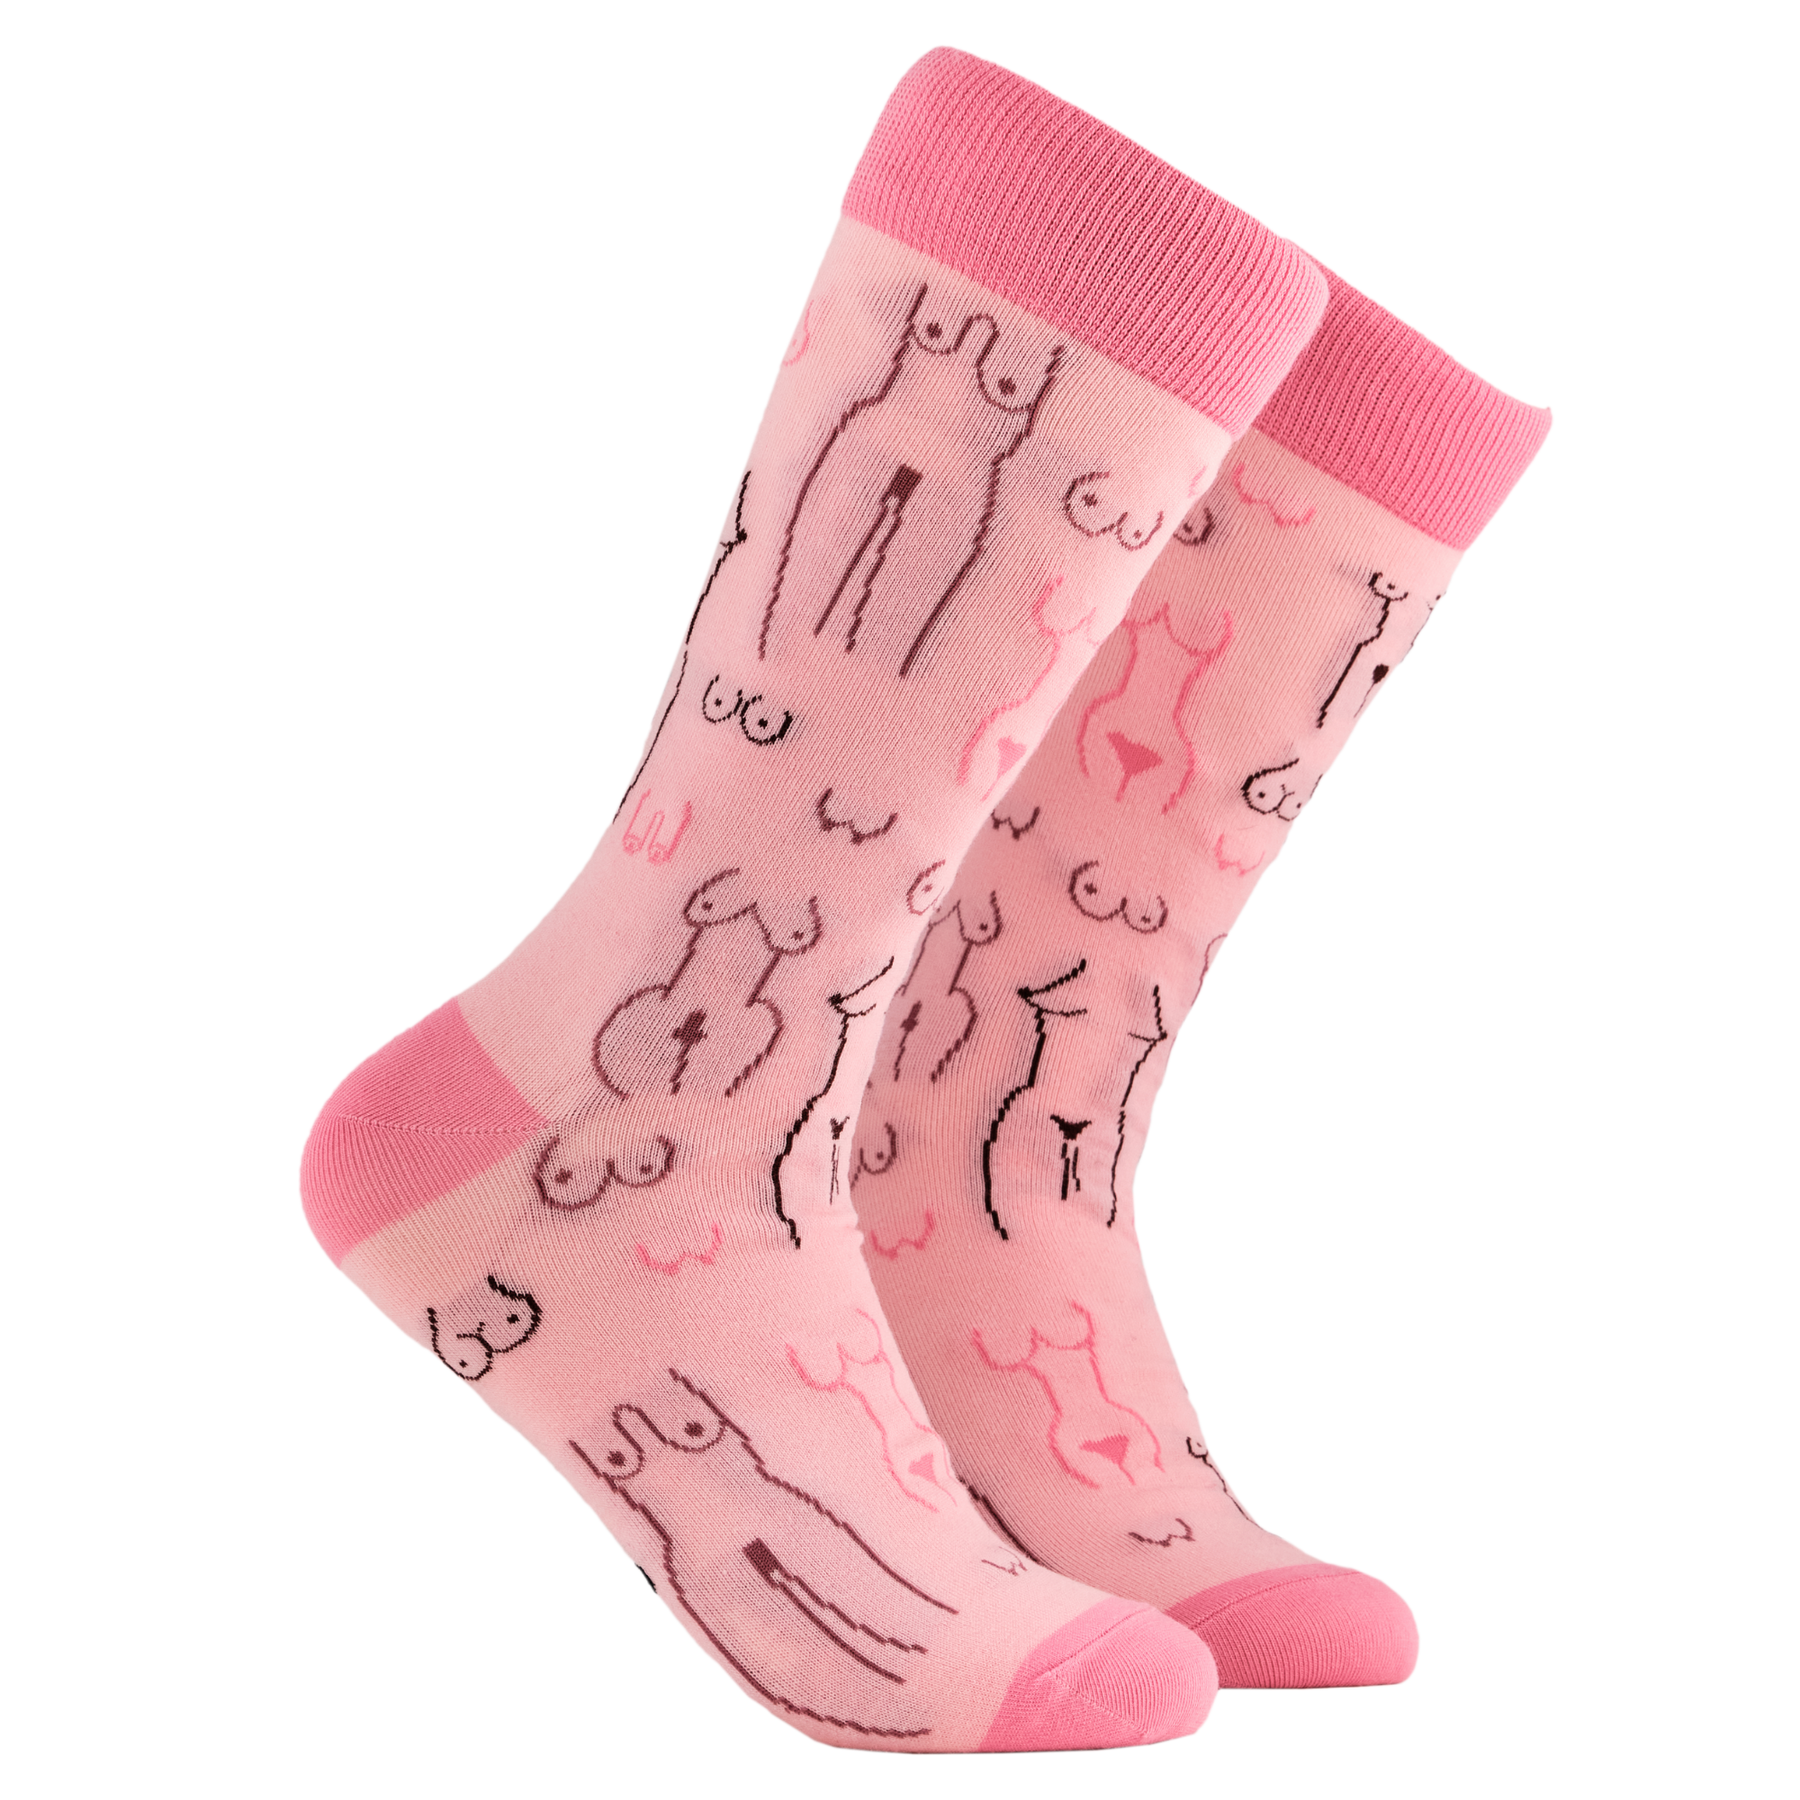 Boobs Socks. A pair of socks depicting tea cups and tea pots. Pink legs, dark pink cuff, heel and toe.